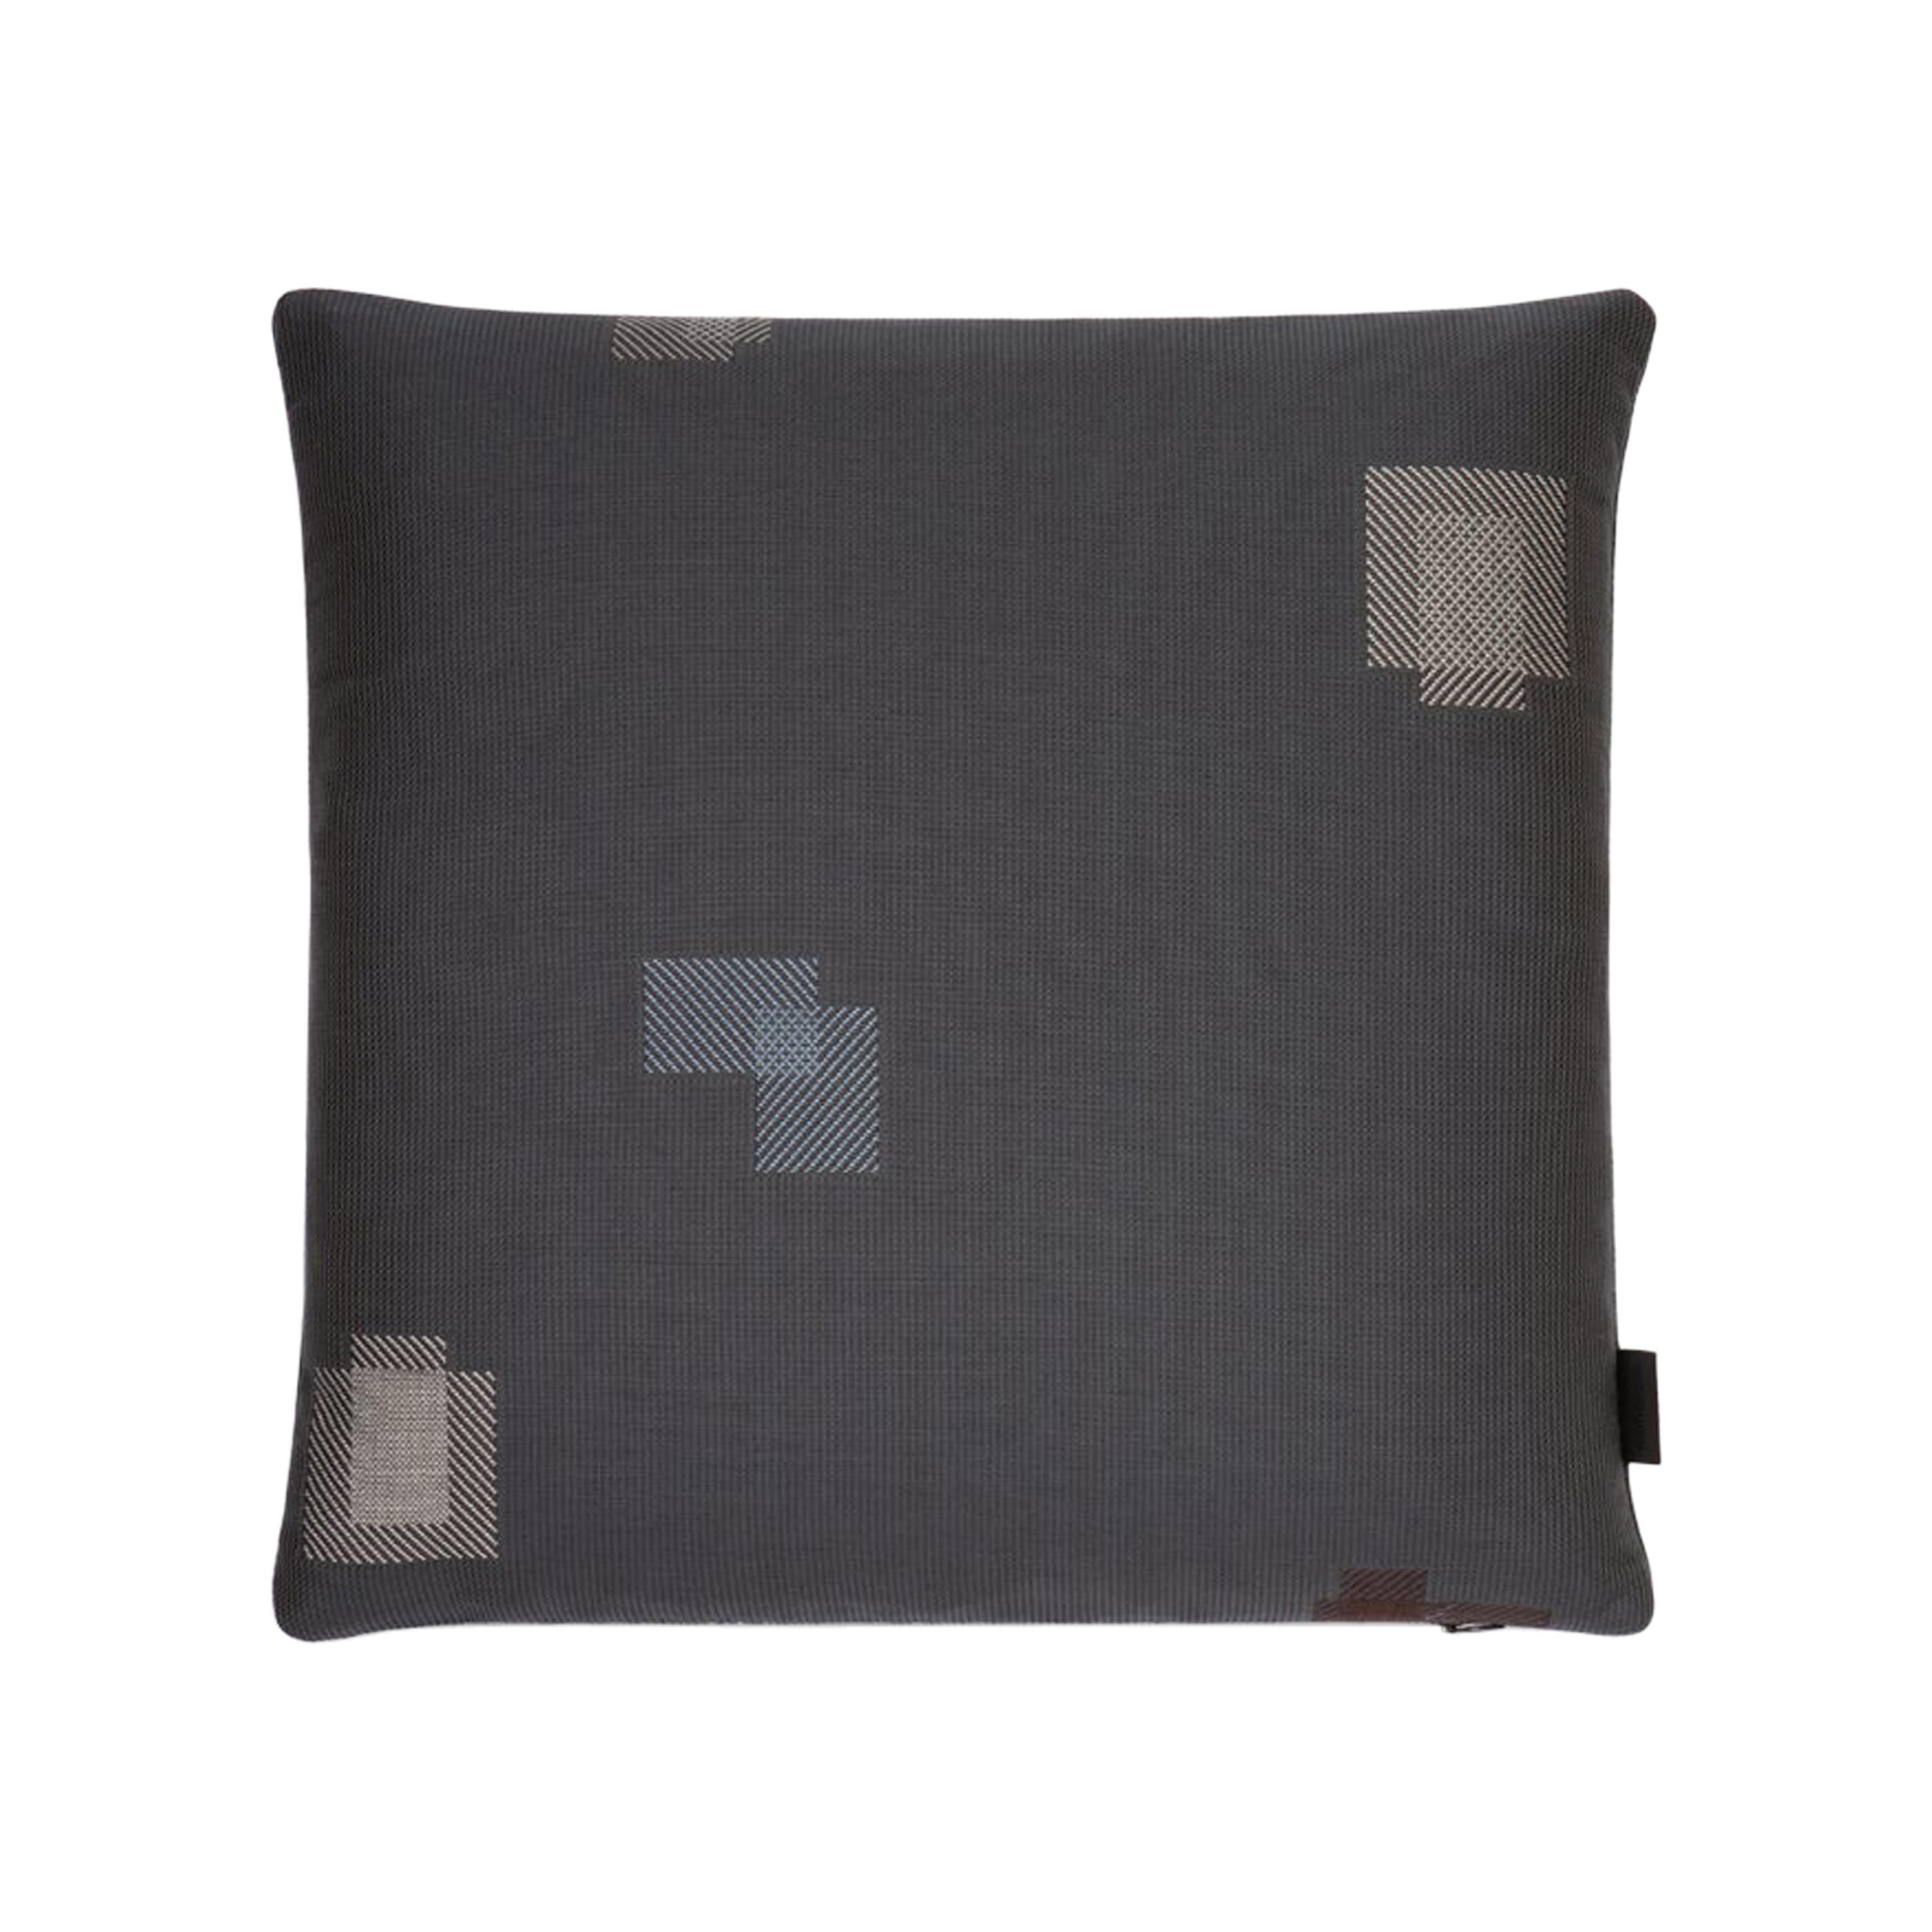 Maharam Pillow, Darning Sampler Large by Scholten & Baijings